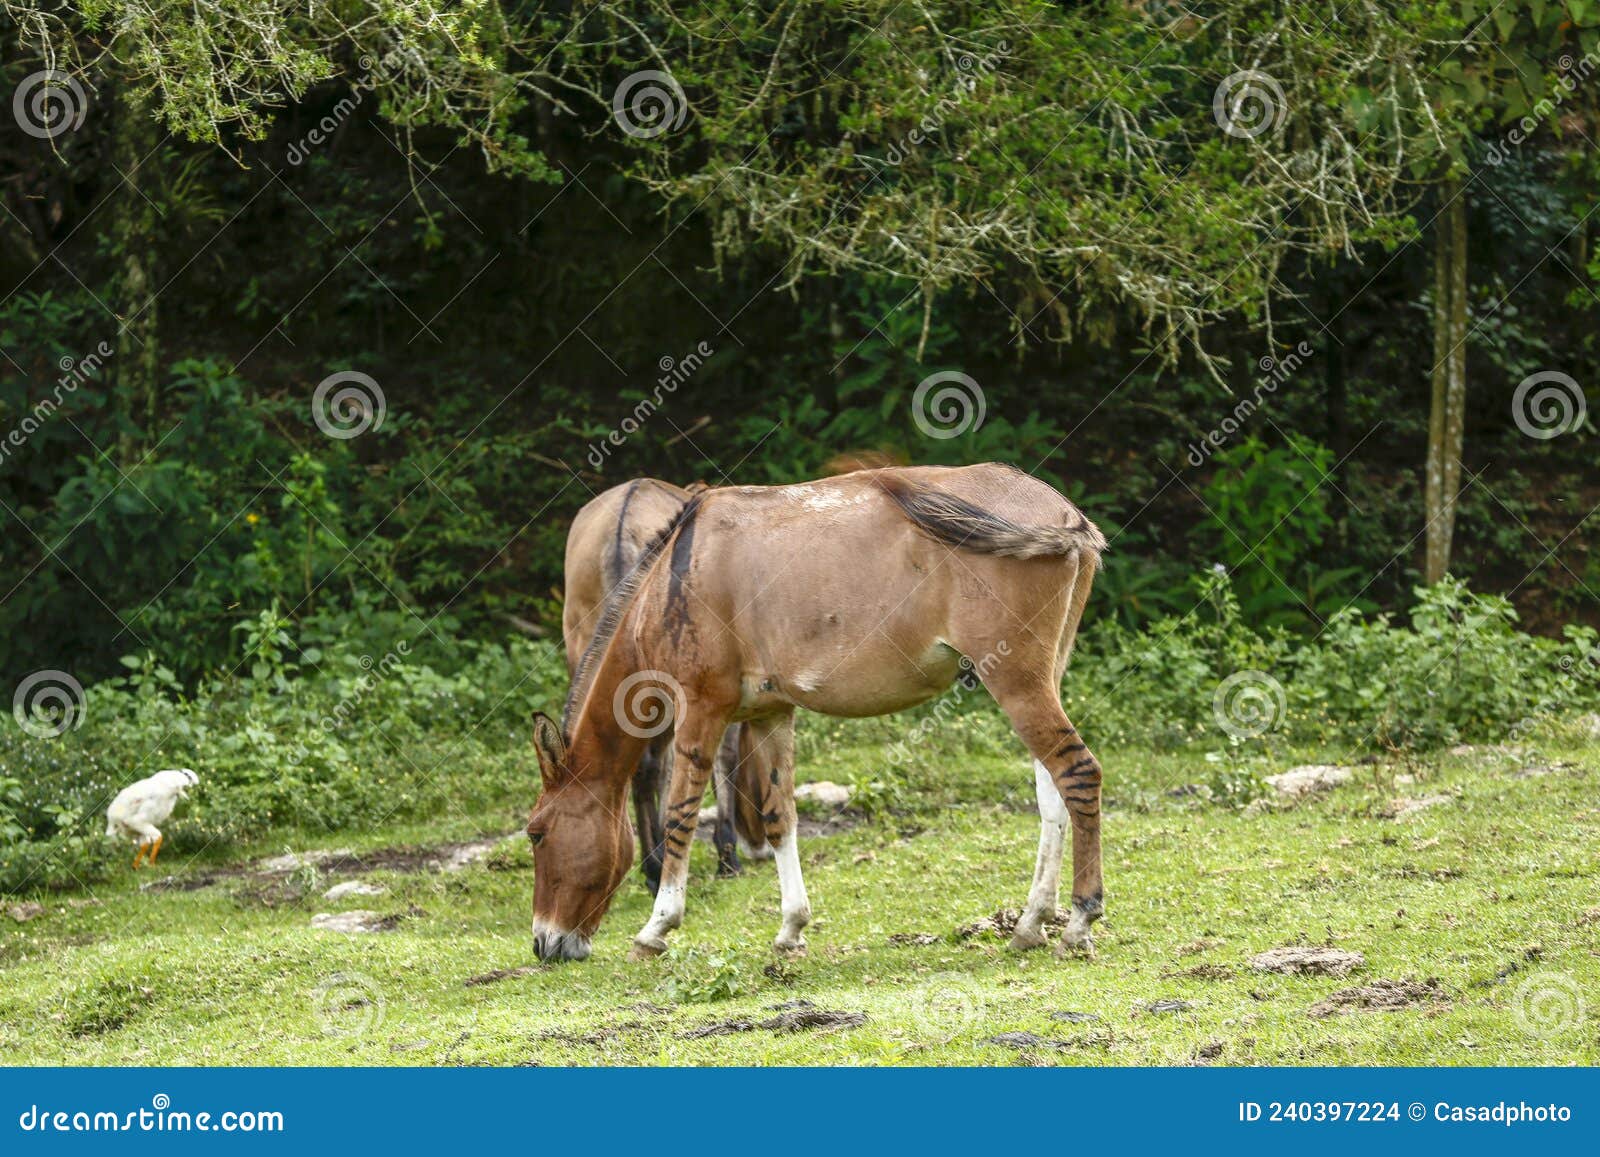 donkeys grazing on green grass